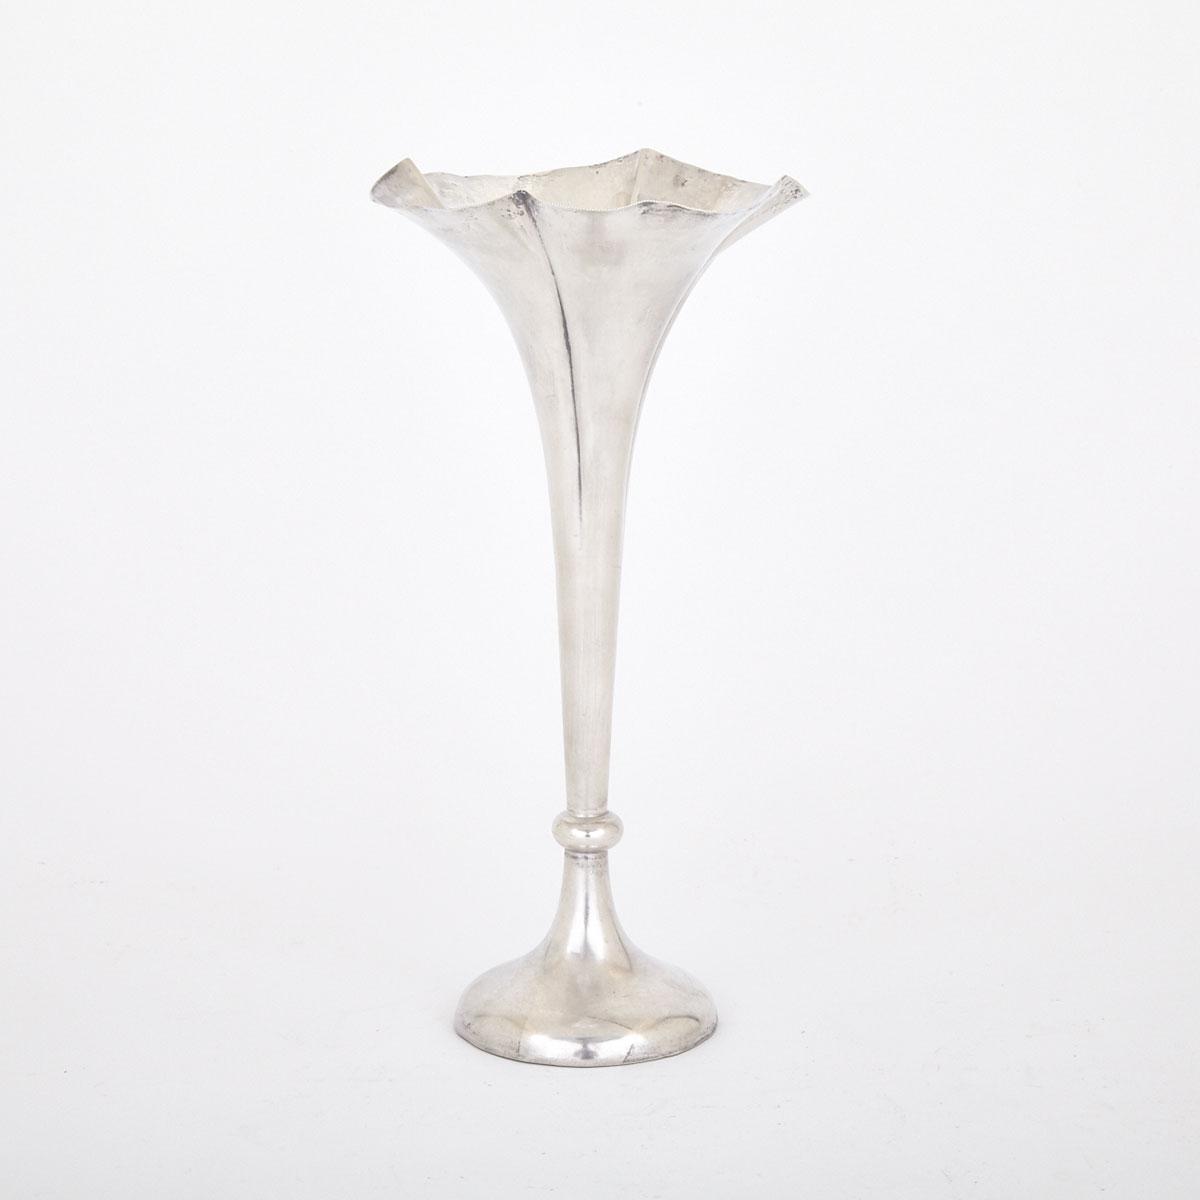 Edwardian Silver Trumpet Vase, Horace Woodward and Co. Ltd., London, 1901